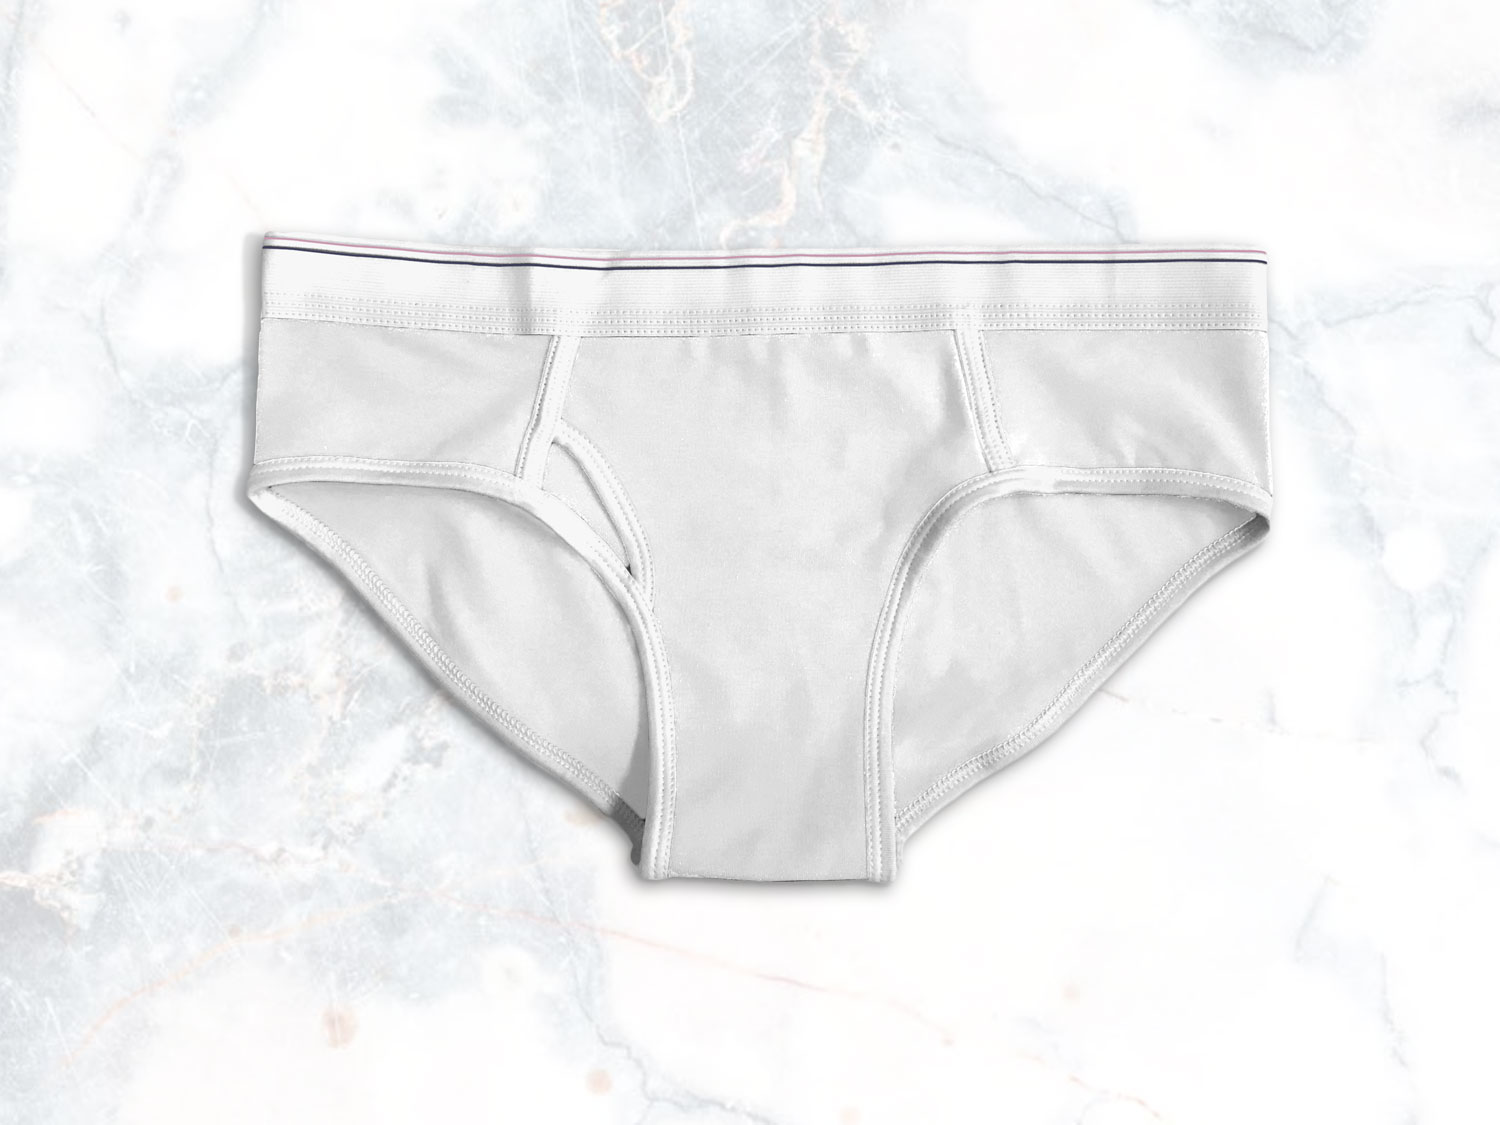 Download Free Underwear Mockup | Free Mockups, Best Free PSD ...